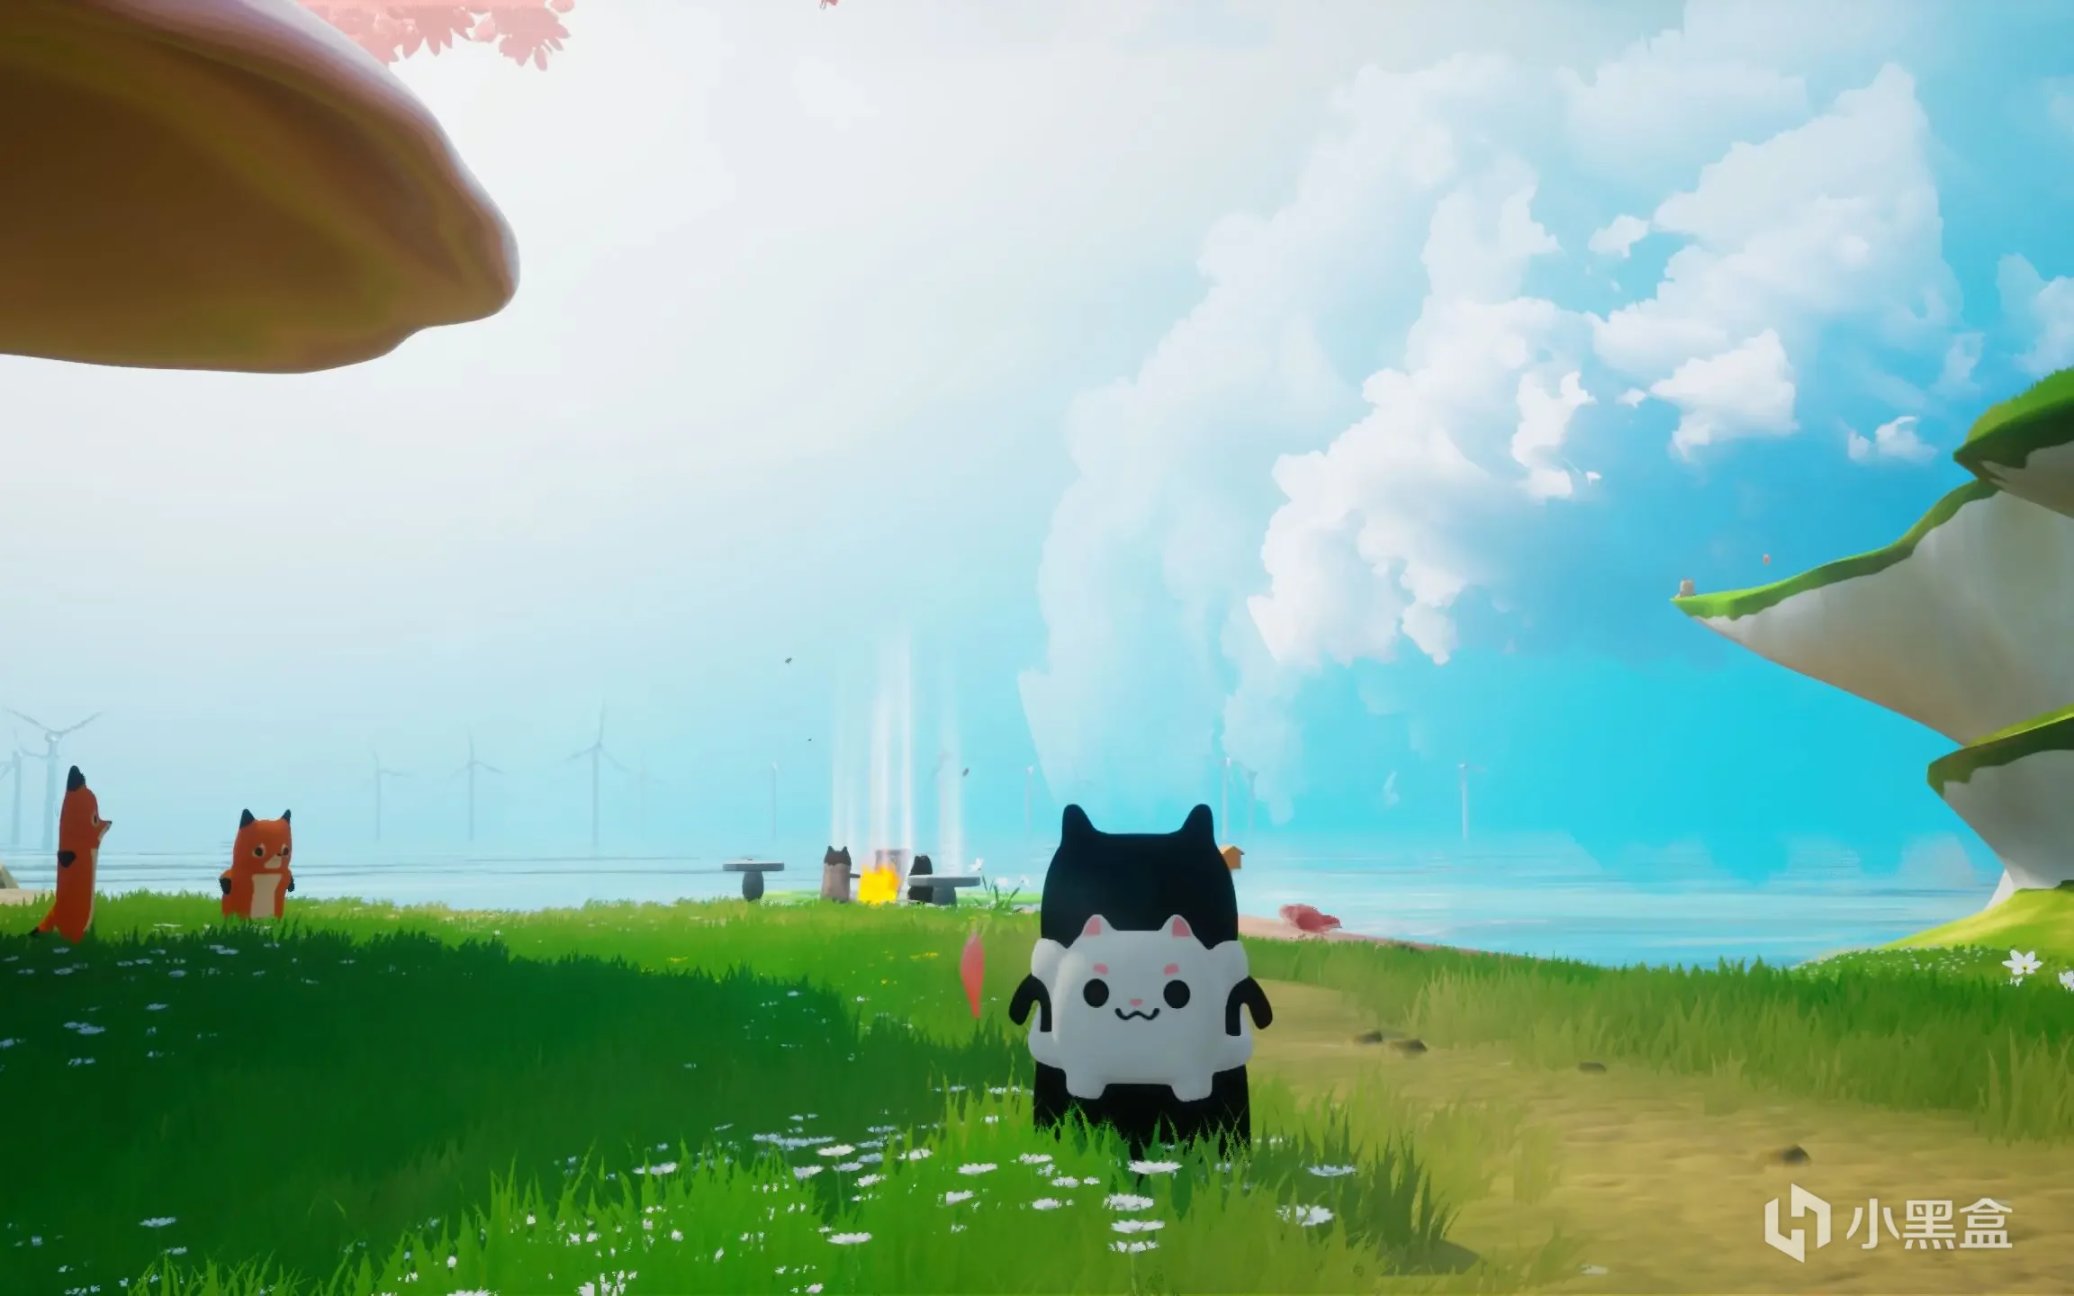 【PC游戏】中国传媒大学的猫咪岛施工队开发游戏《喵之旅人》即将上线-第1张